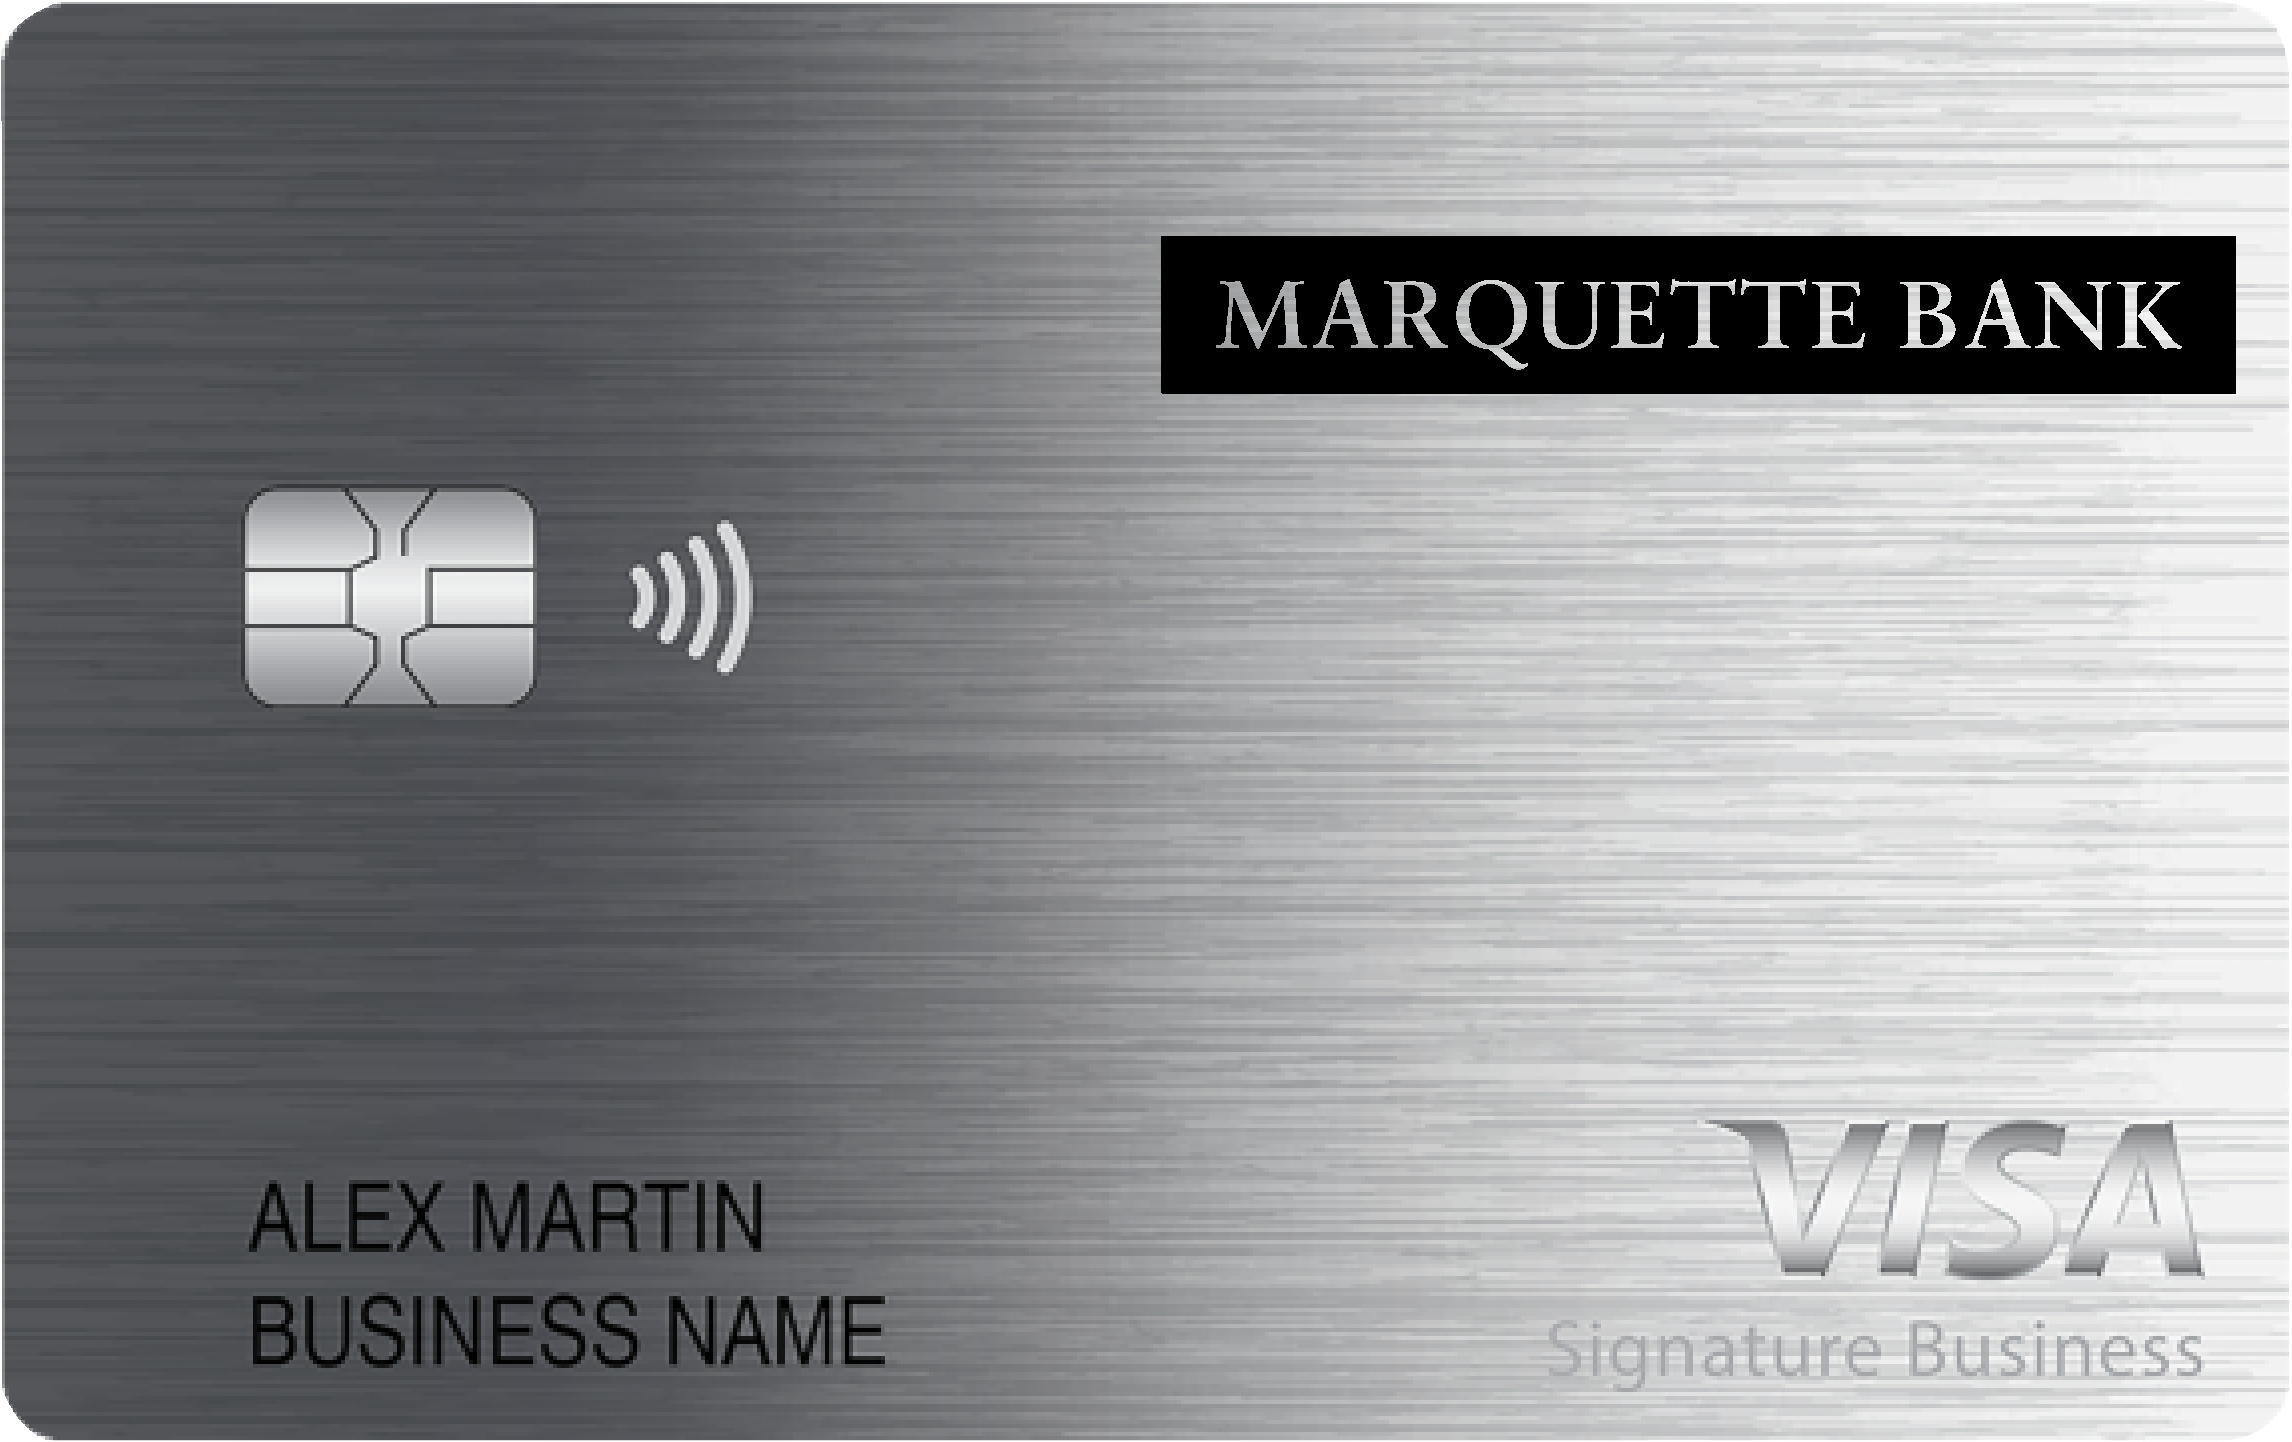 Marquette Bank Smart Business Rewards Card